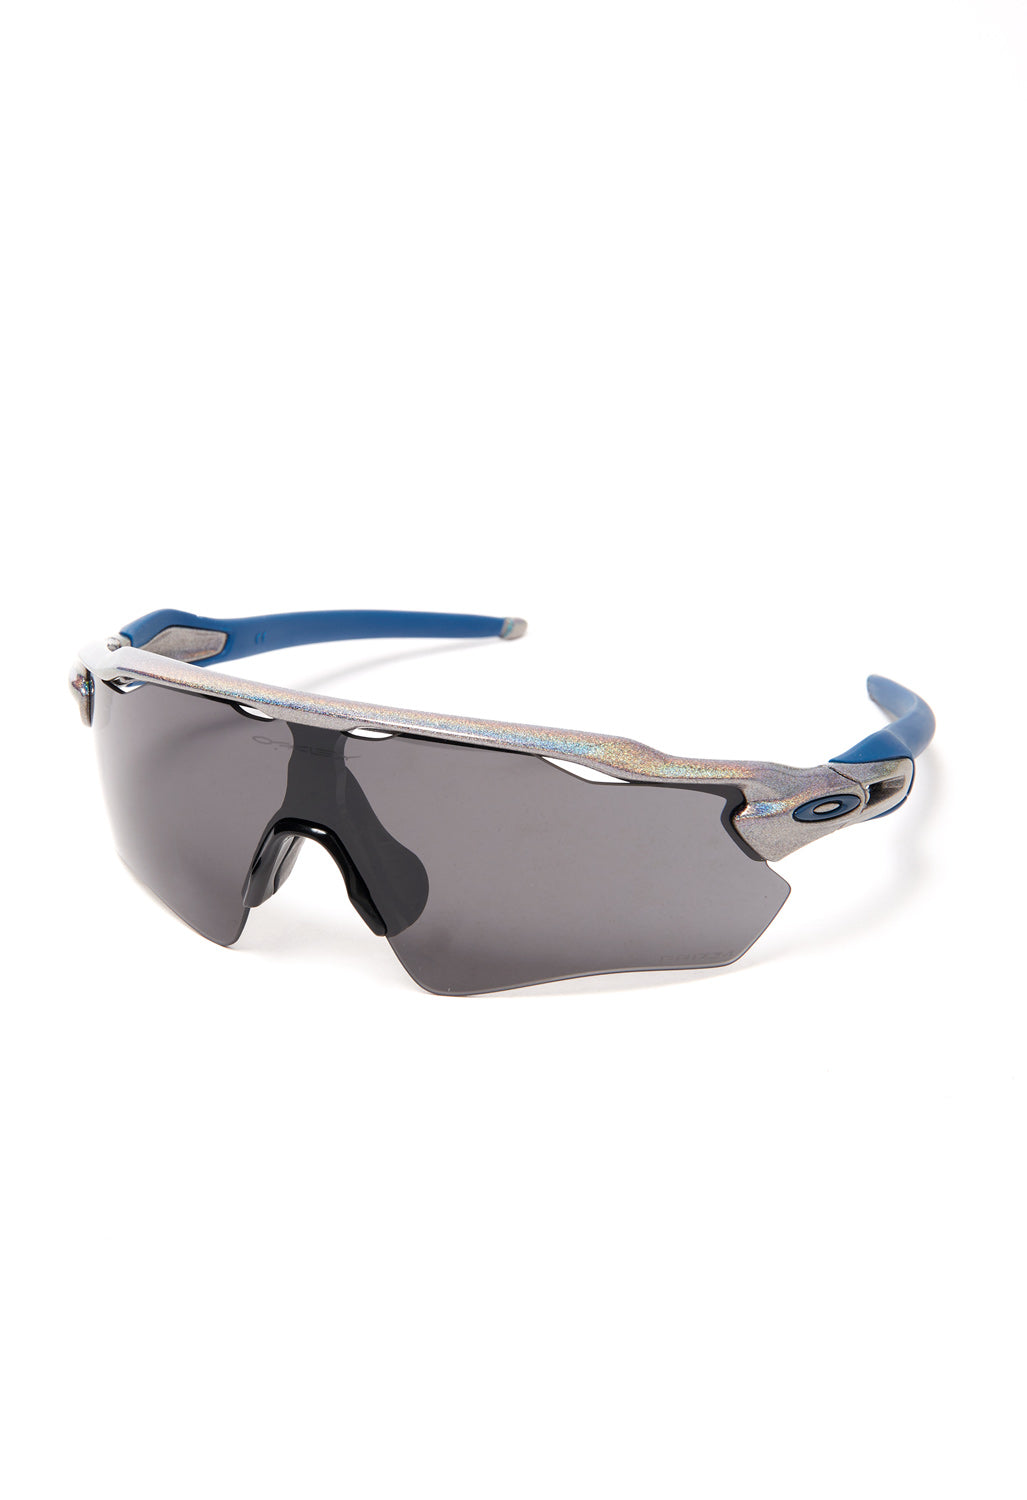 Oakley Radar EV Path Holographic/Prizm Grey Sunglasses 0